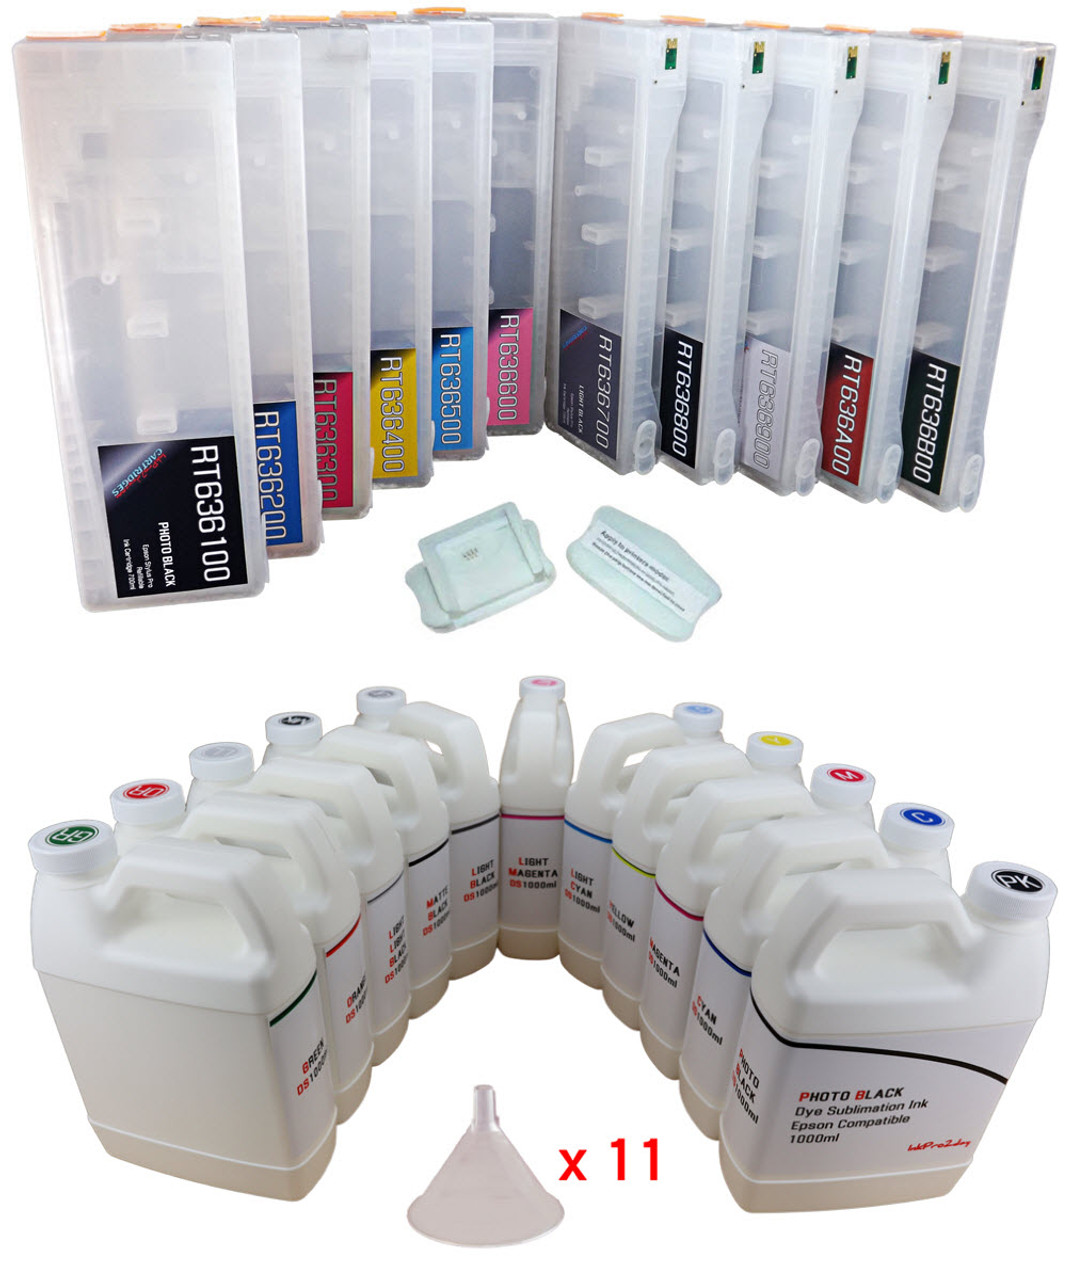 Dye Sublimation Ink 11- 1000ml Bottles 11- Refillable Ink Cartridges for Epson Stylus Pro 7900 9900 printers